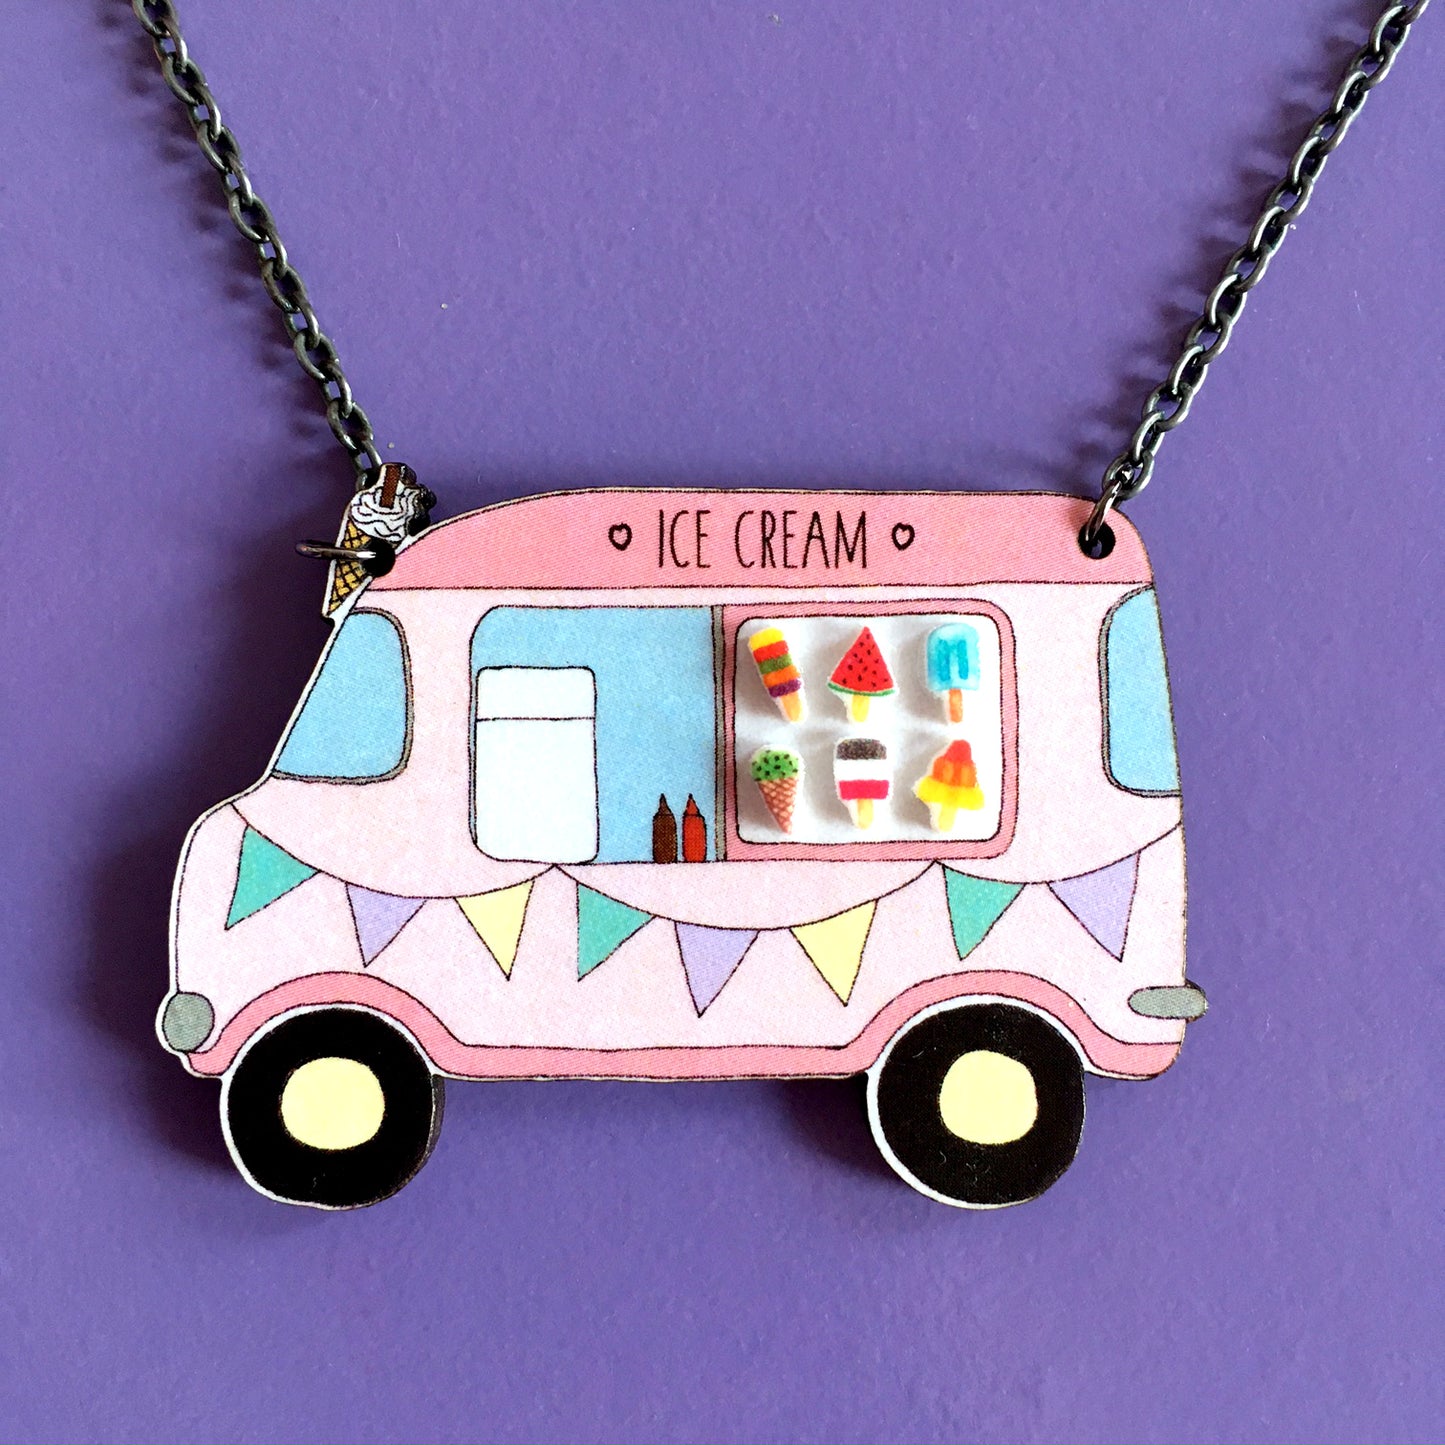 Ice cream van necklace - Quirky statement necklace